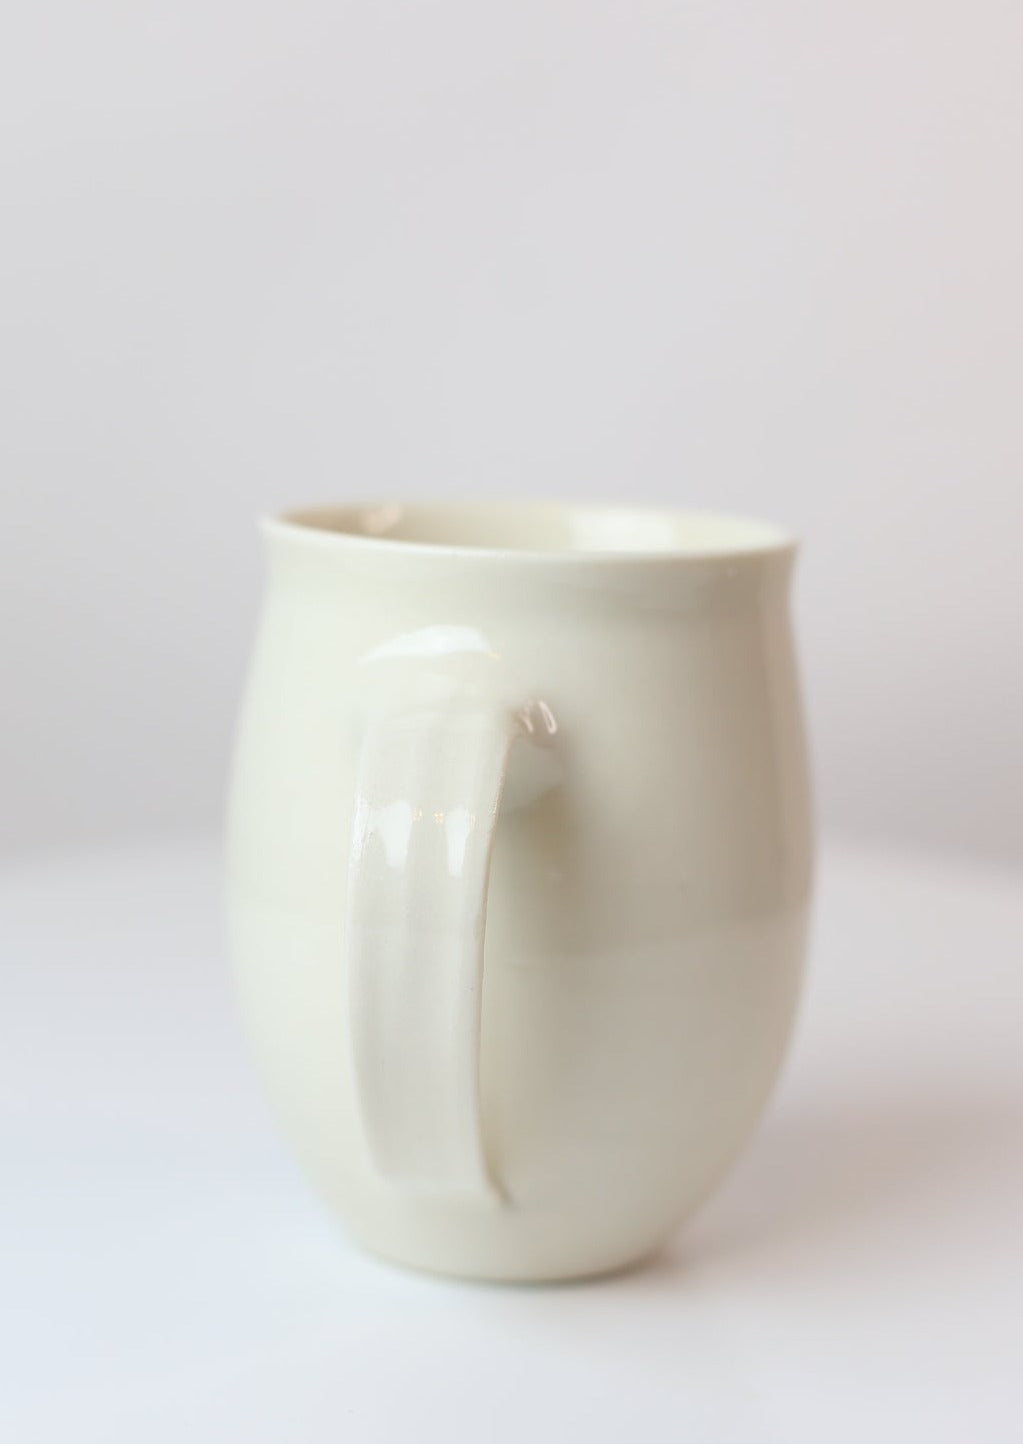 Autumn themed Porcelain mug